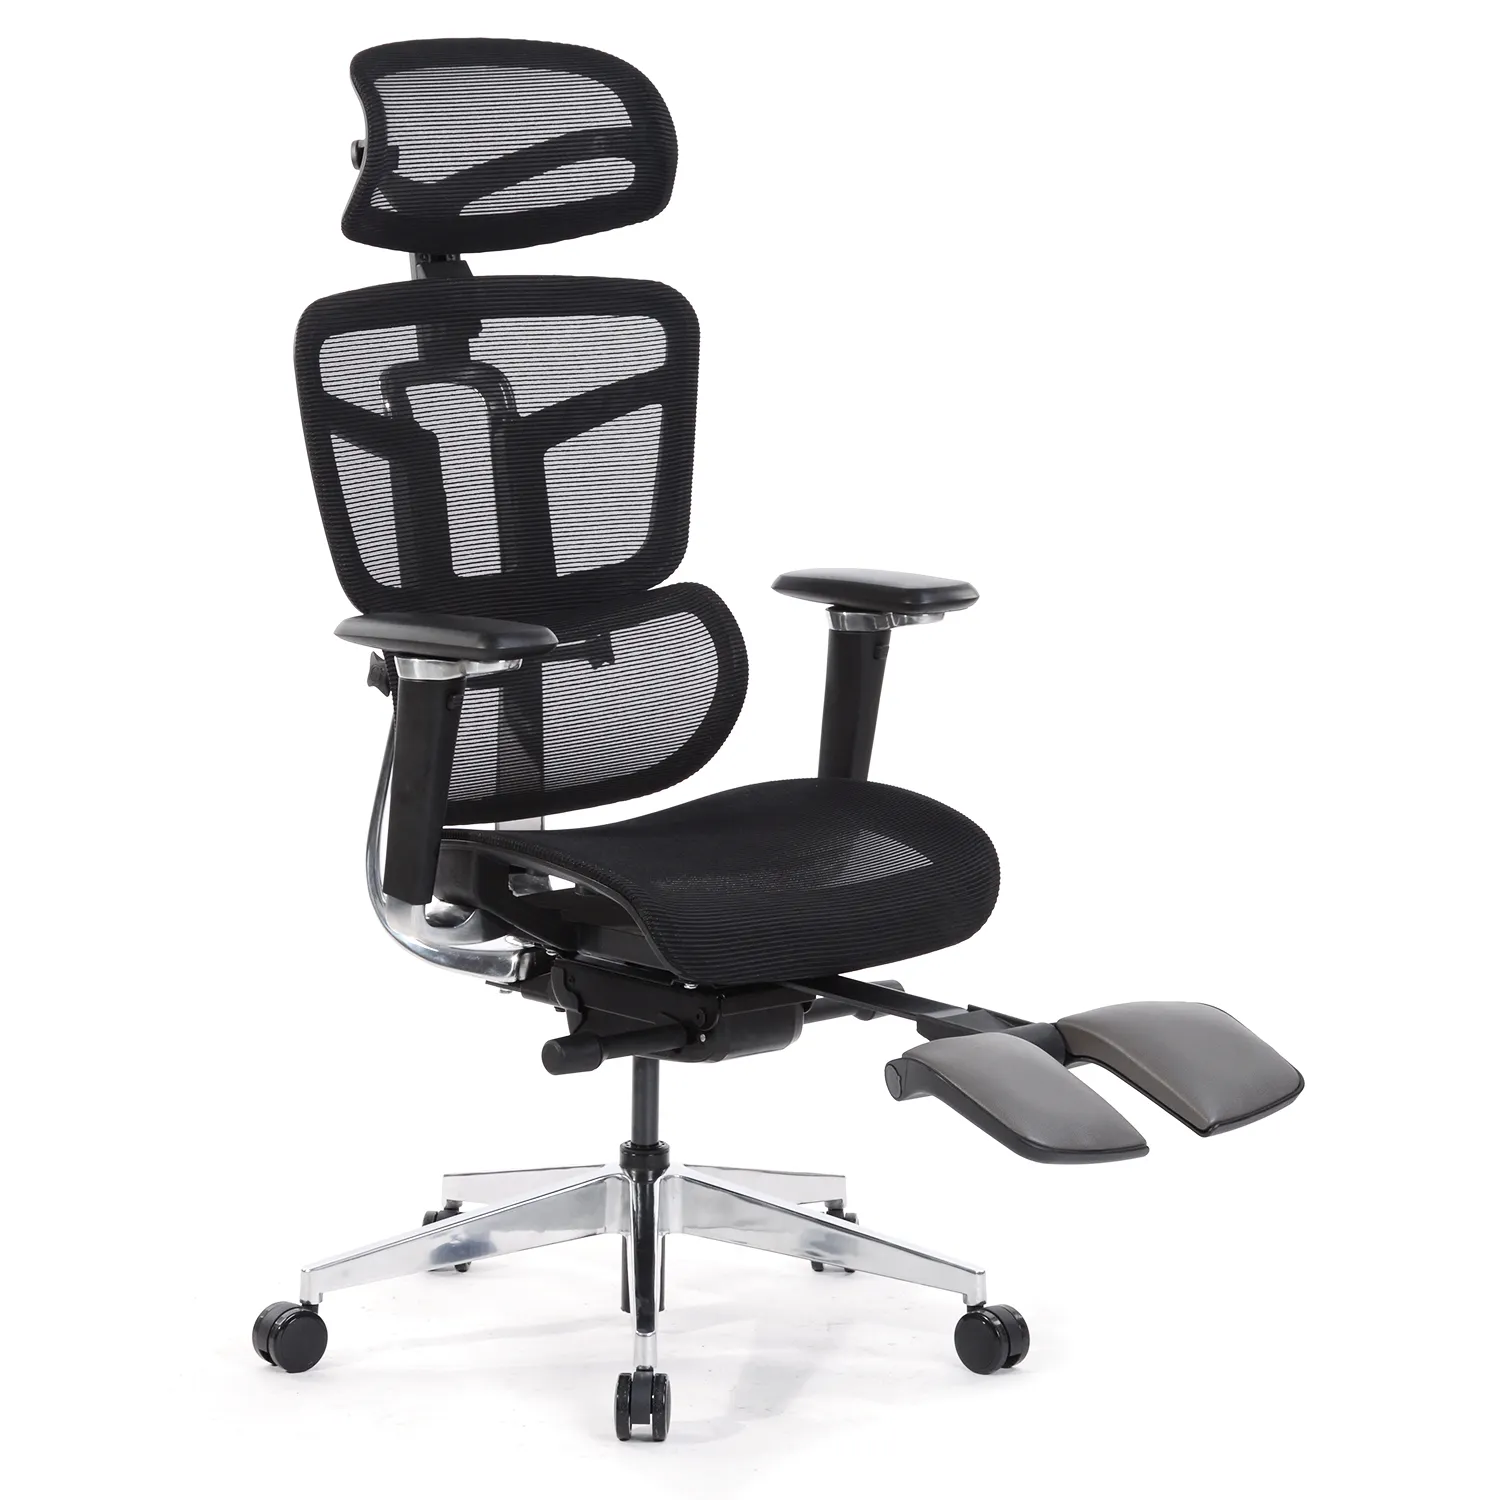 Li&sung EVO 10026 Best Quality 5D Armrest Aluminum Base High Back Ergonomic Gaming Mesh Chair